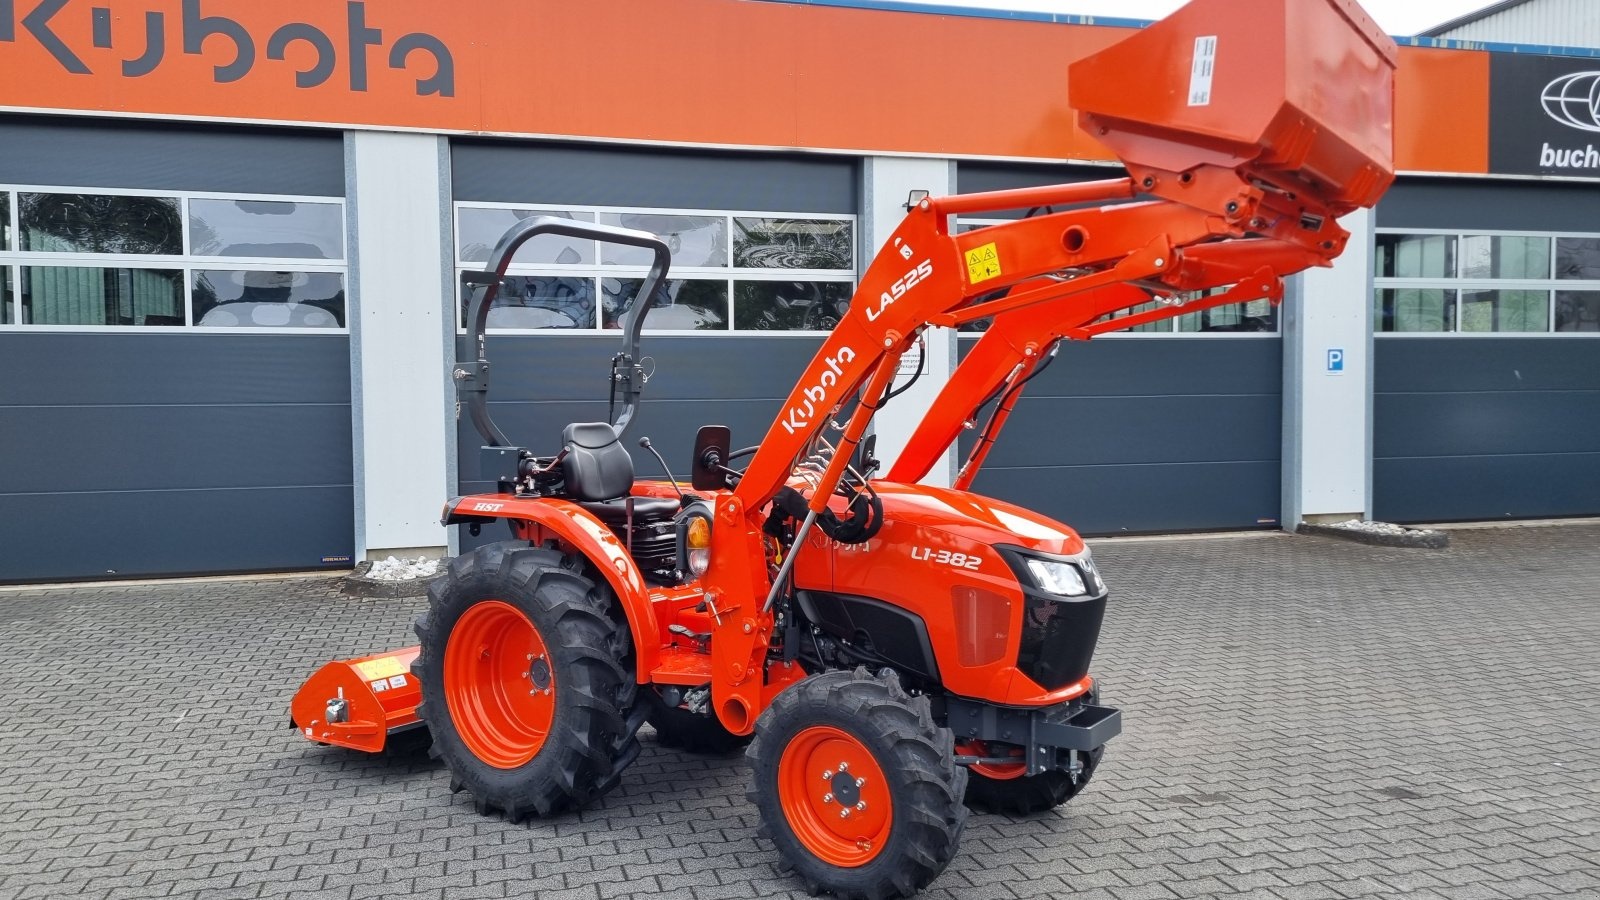 Kubota L1-382 tractor 26 800 €